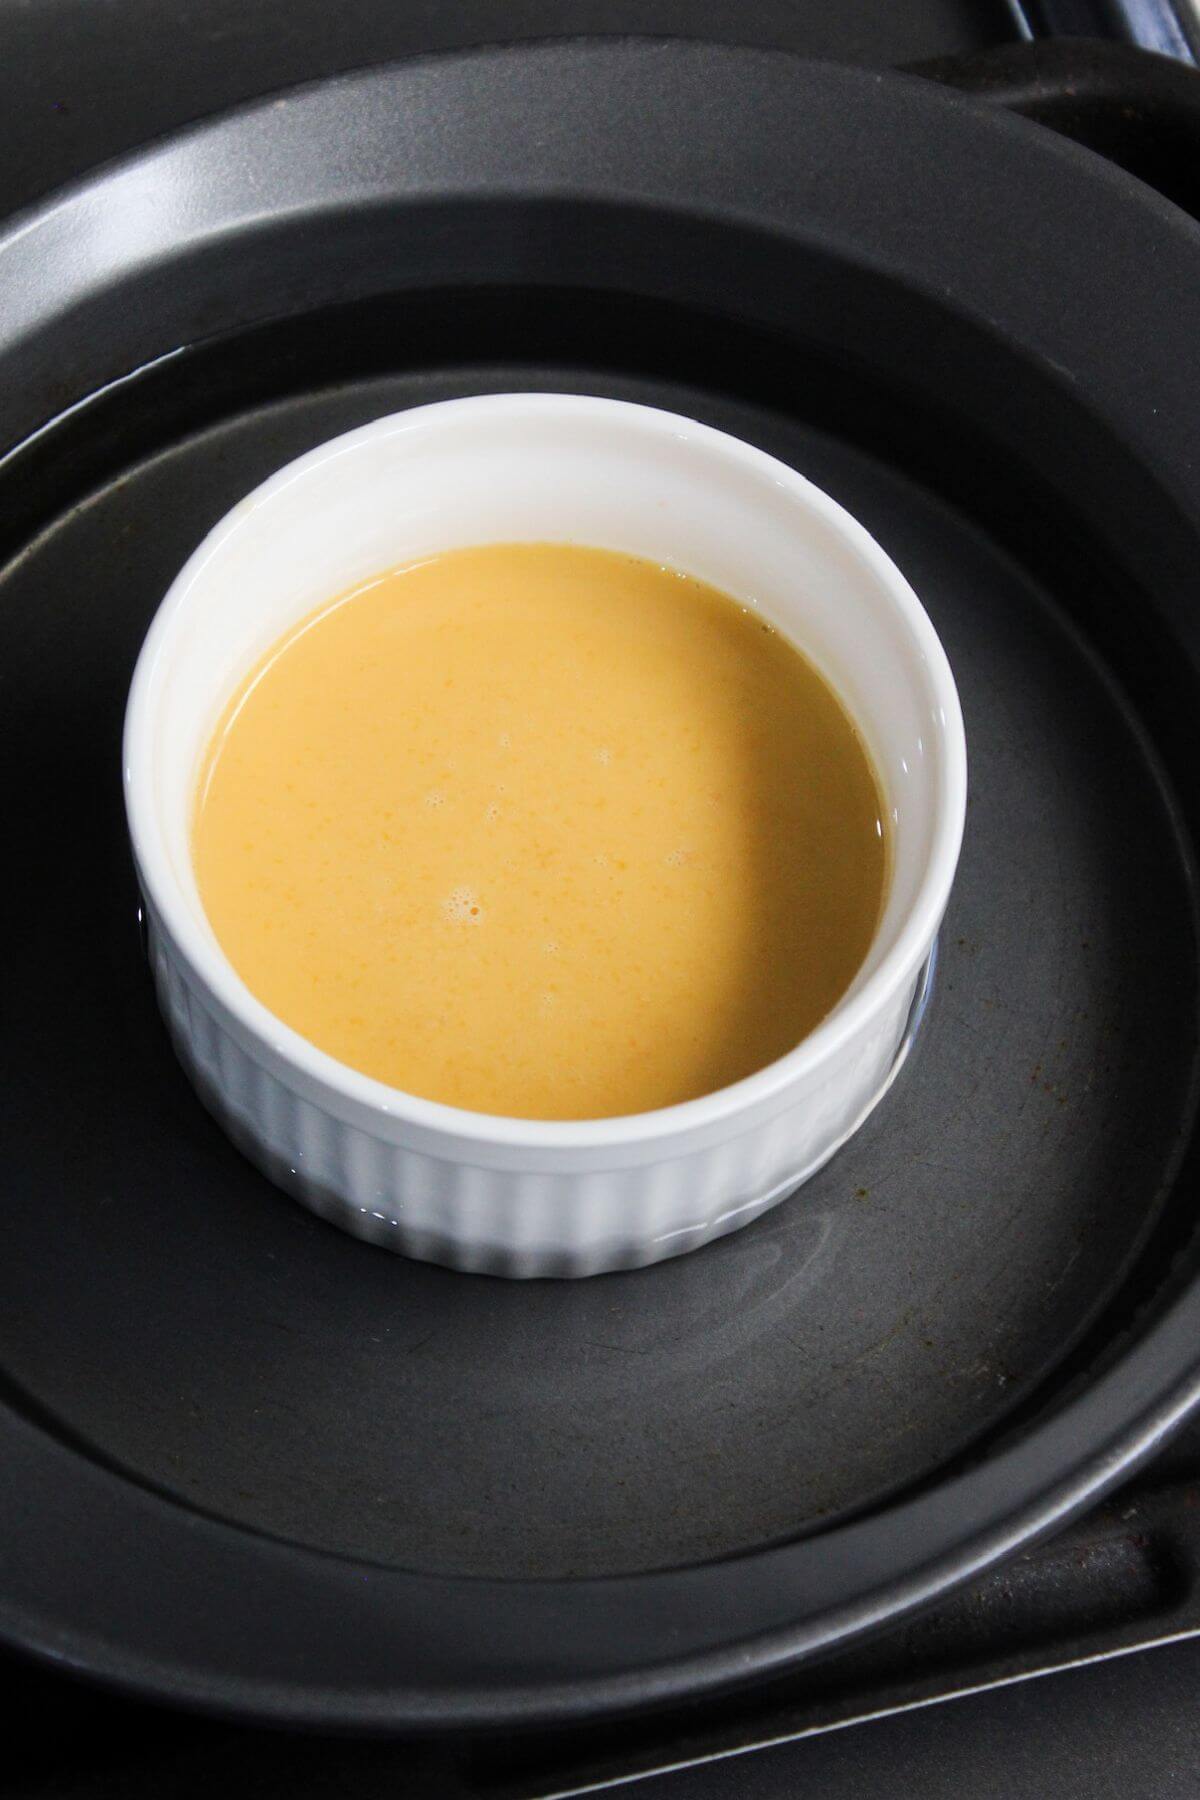 A ramekin of uncooked leche flan sitting on baking pan with water bath.